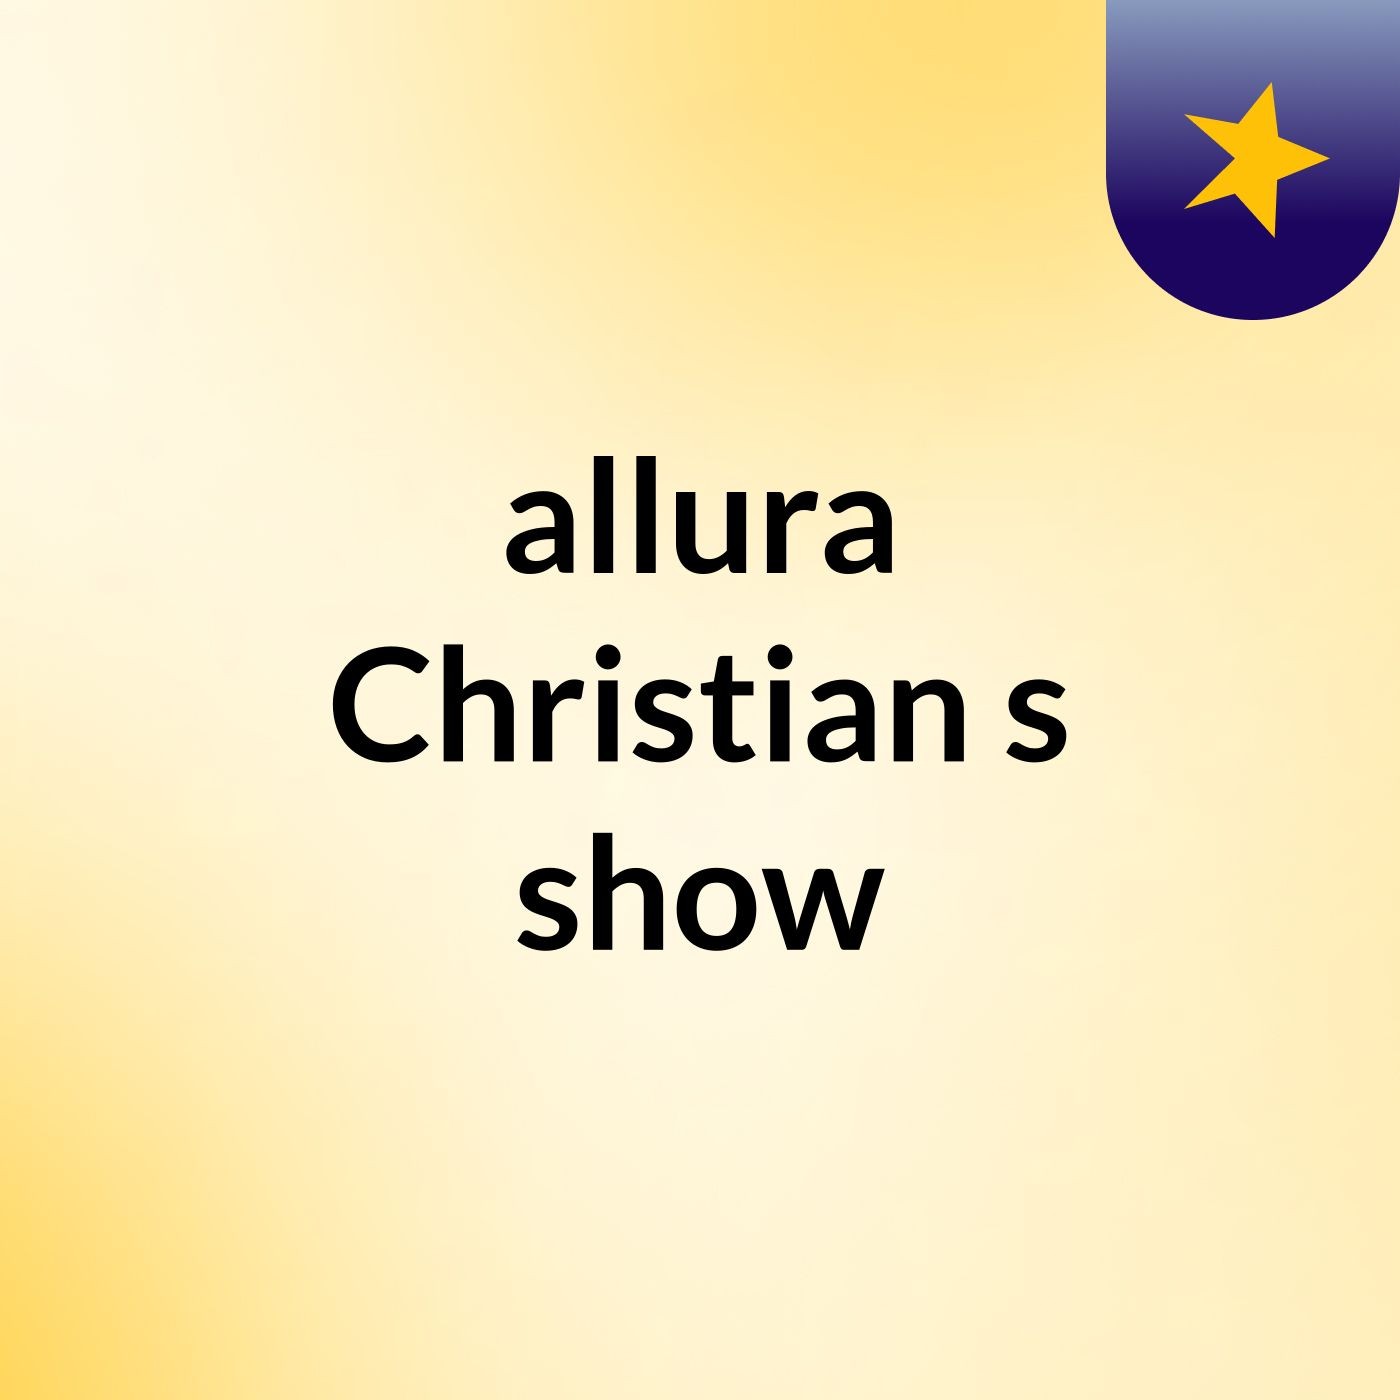 allura Christian's show